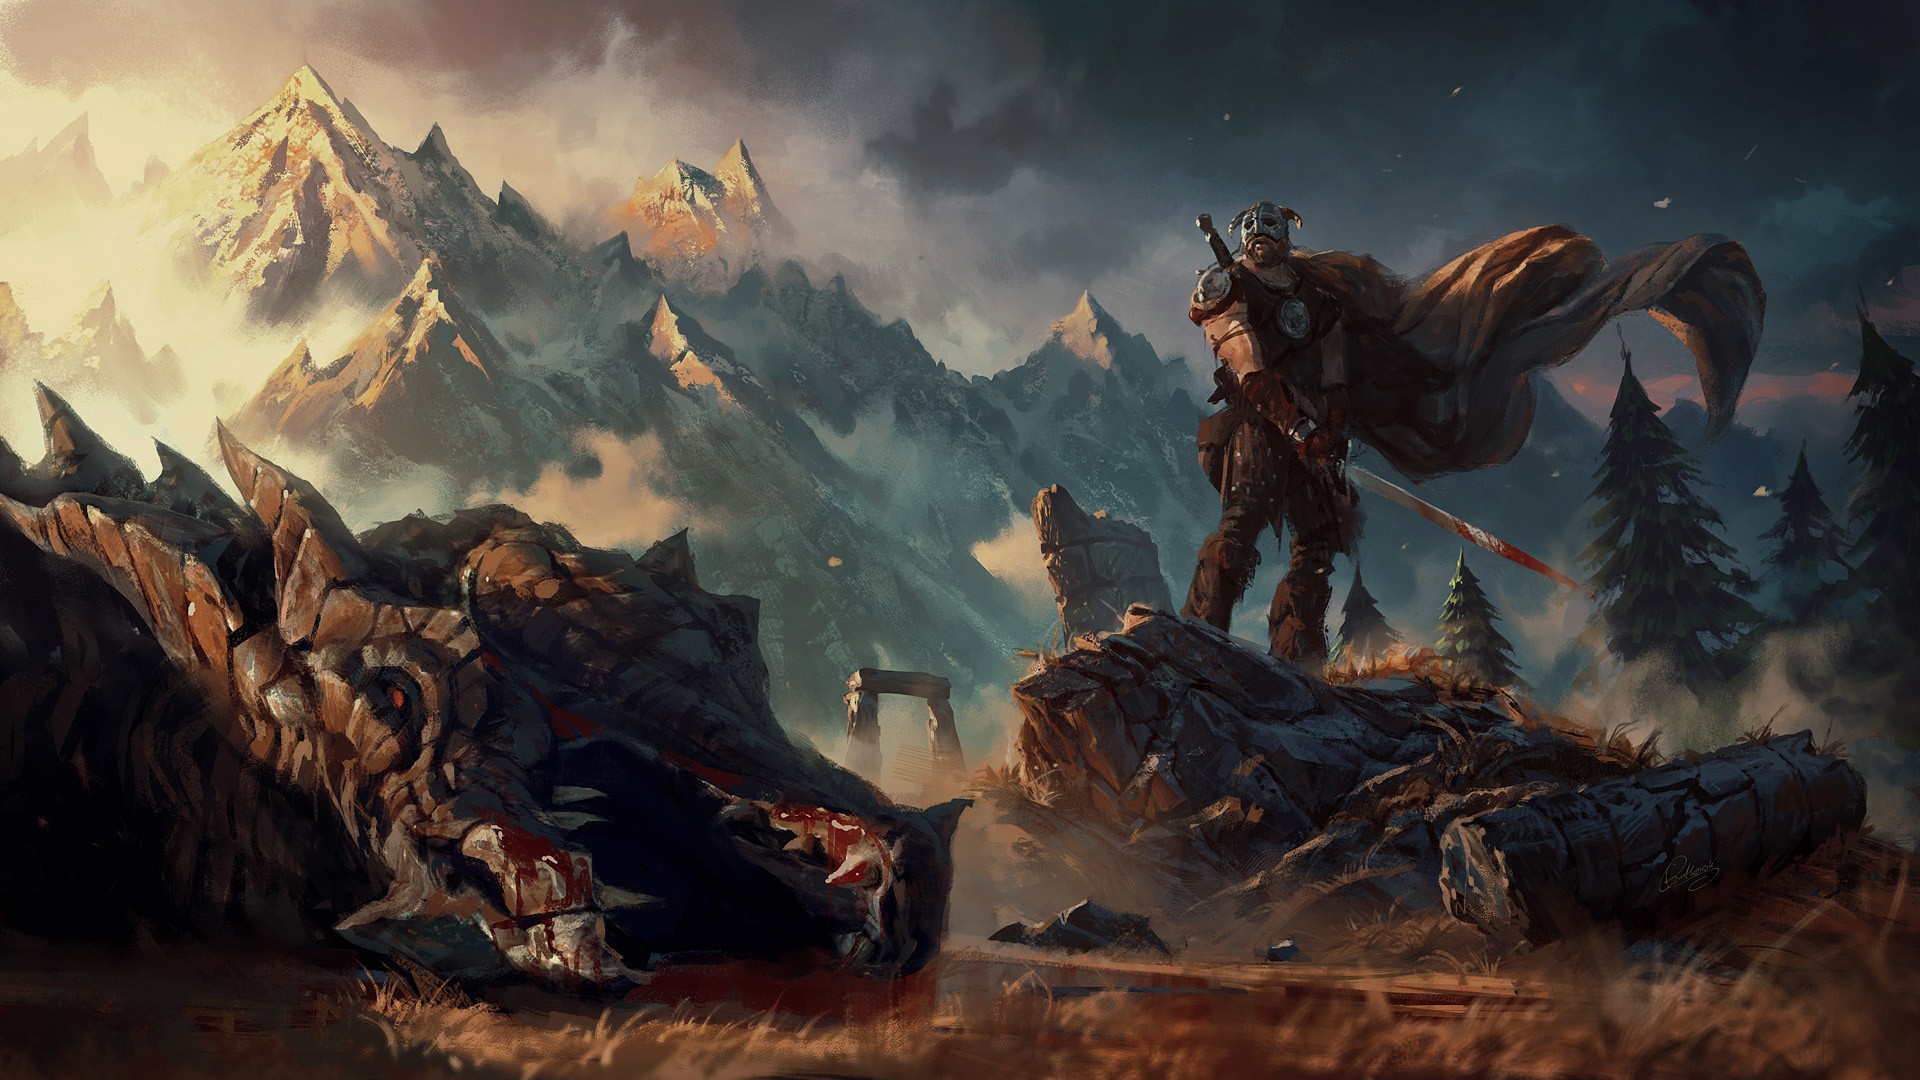 Fantasy Art Artwork Video Games The Elder Scrolls V Skyrim Wallpapers Hd Desktop And